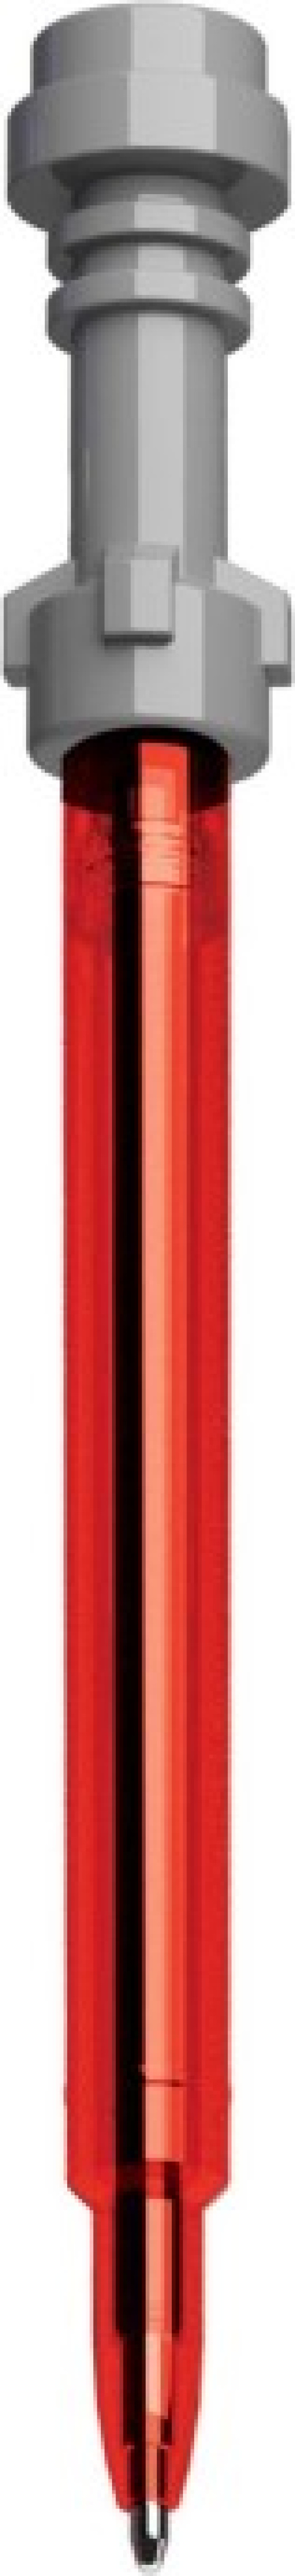 5007767-1 Lightsaber Gel Pen Red